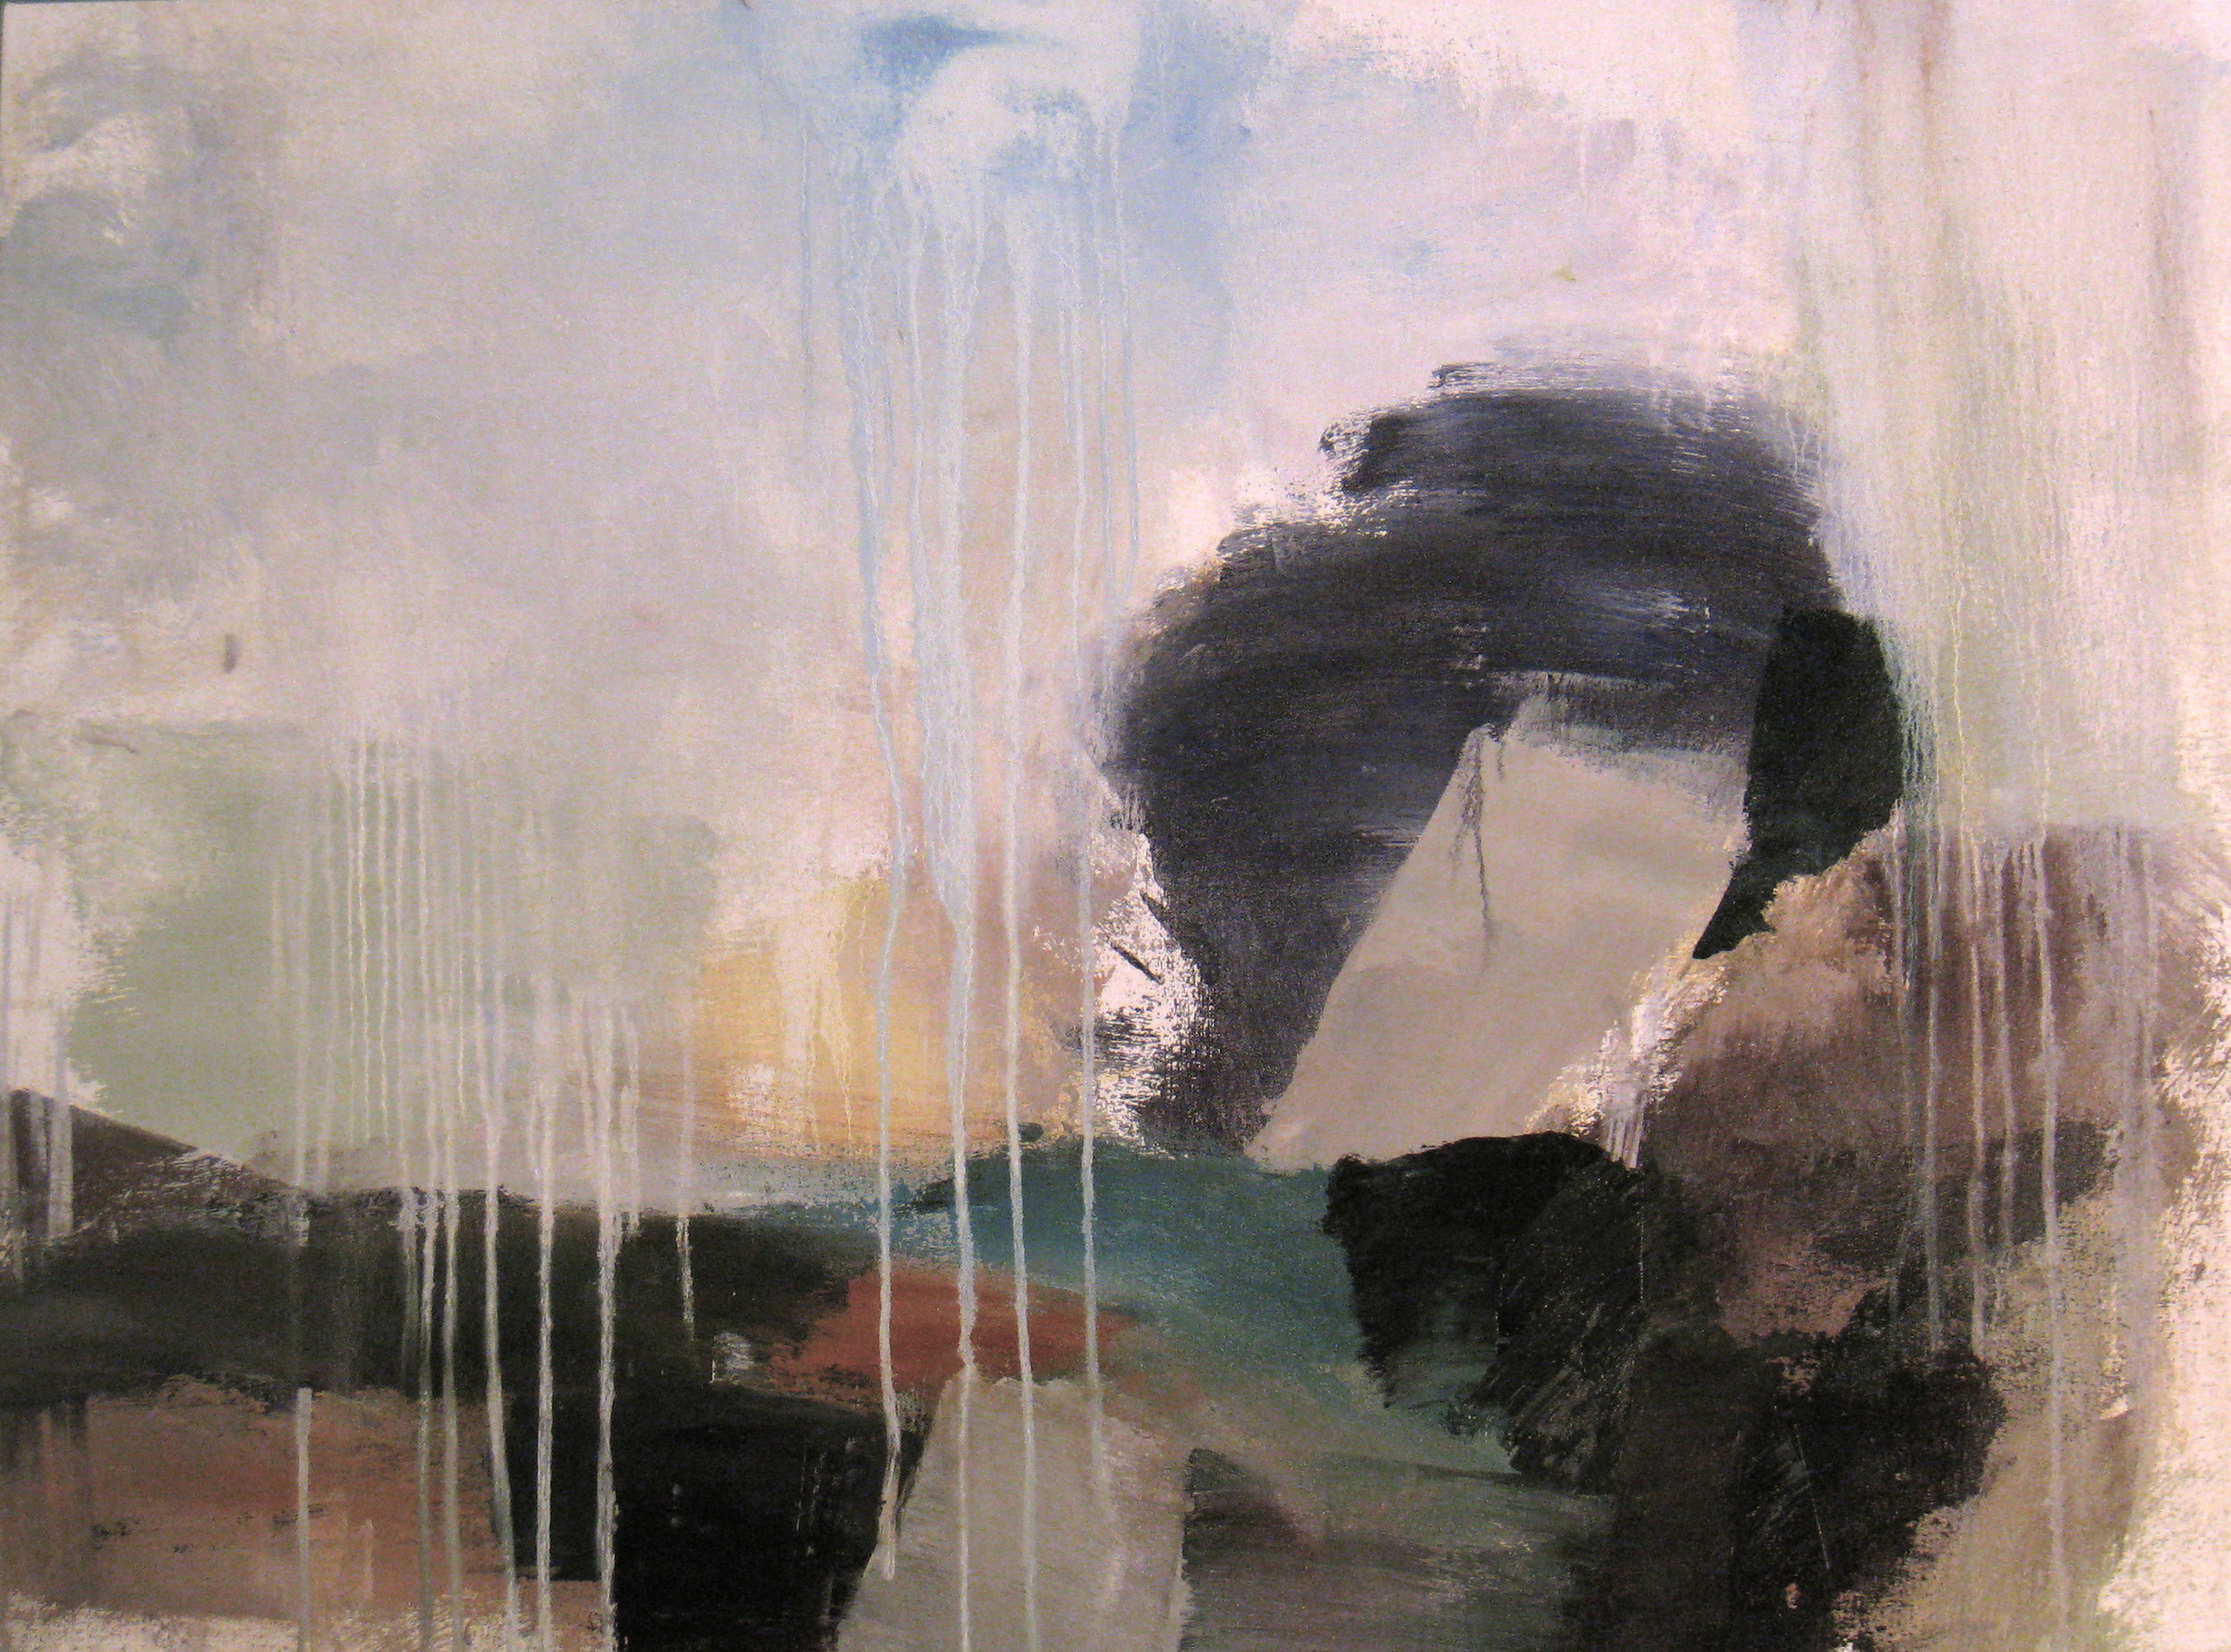  Jade 1, 2009, oil on canvas, 30"x42" 